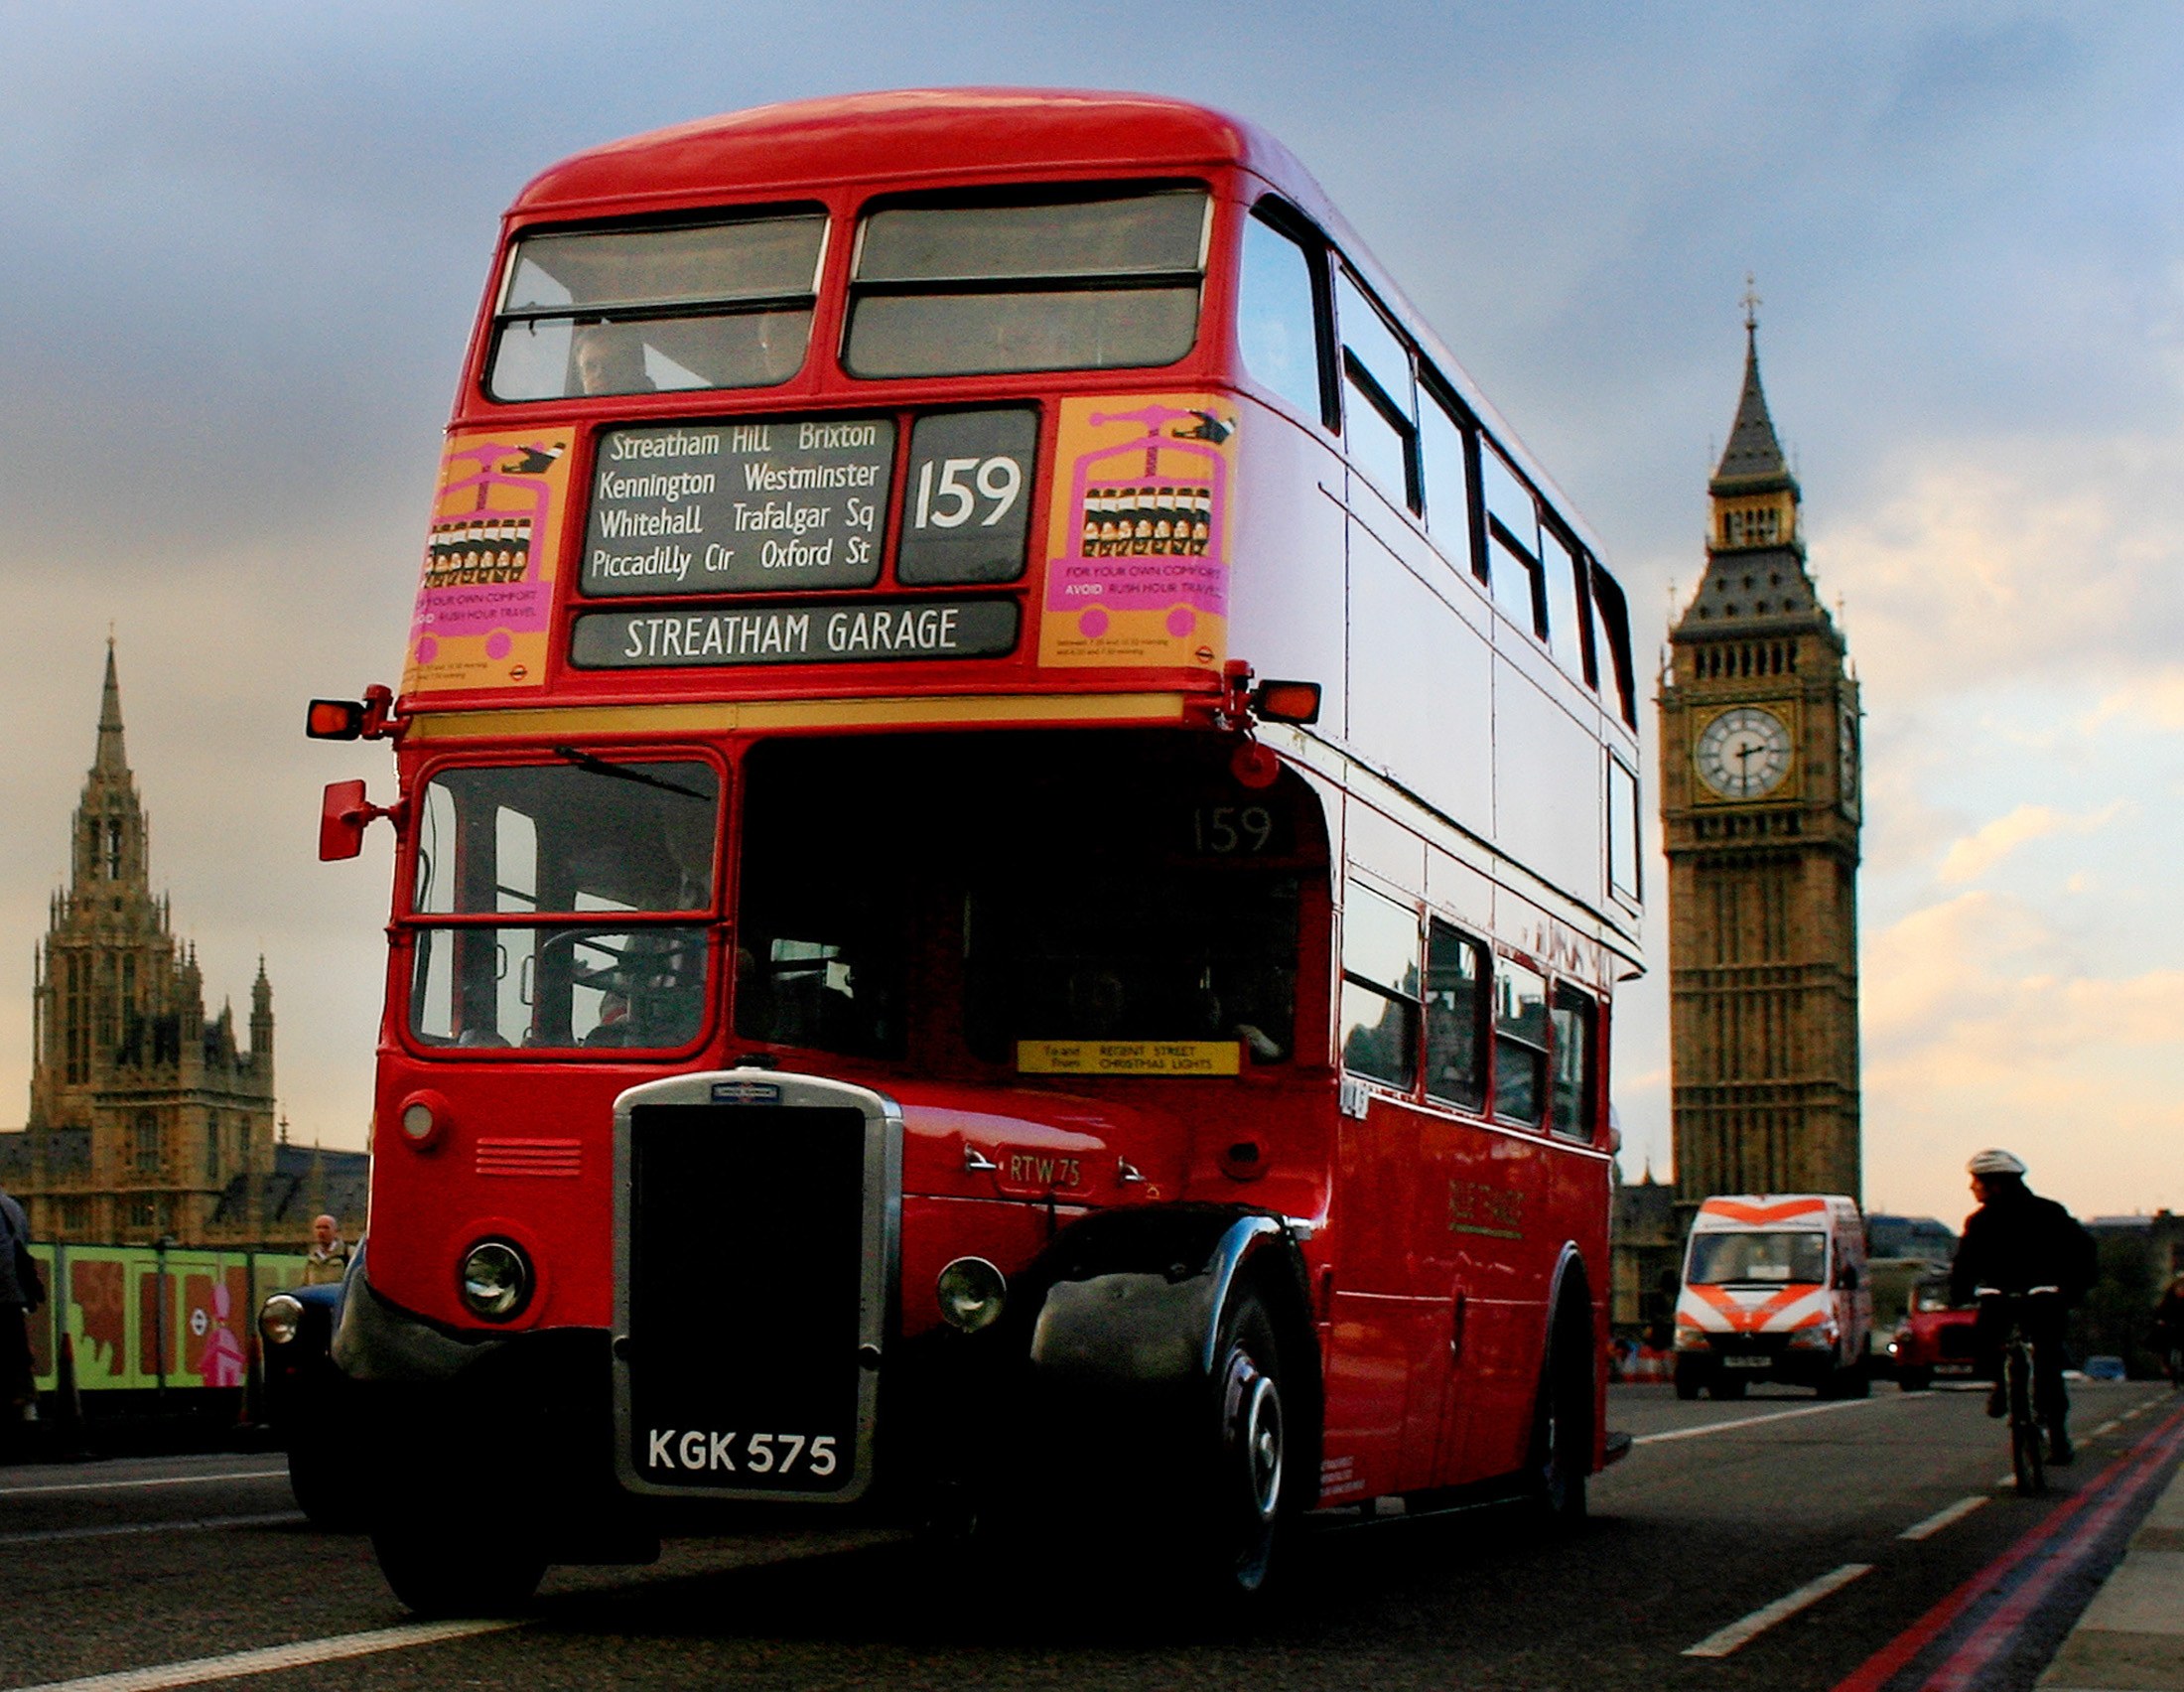 A trip to london. Двухэтажный автобус Рутмастер. Лондонский автобус Routemaster. Дабл Деккер. Дабл Деккер автобус.